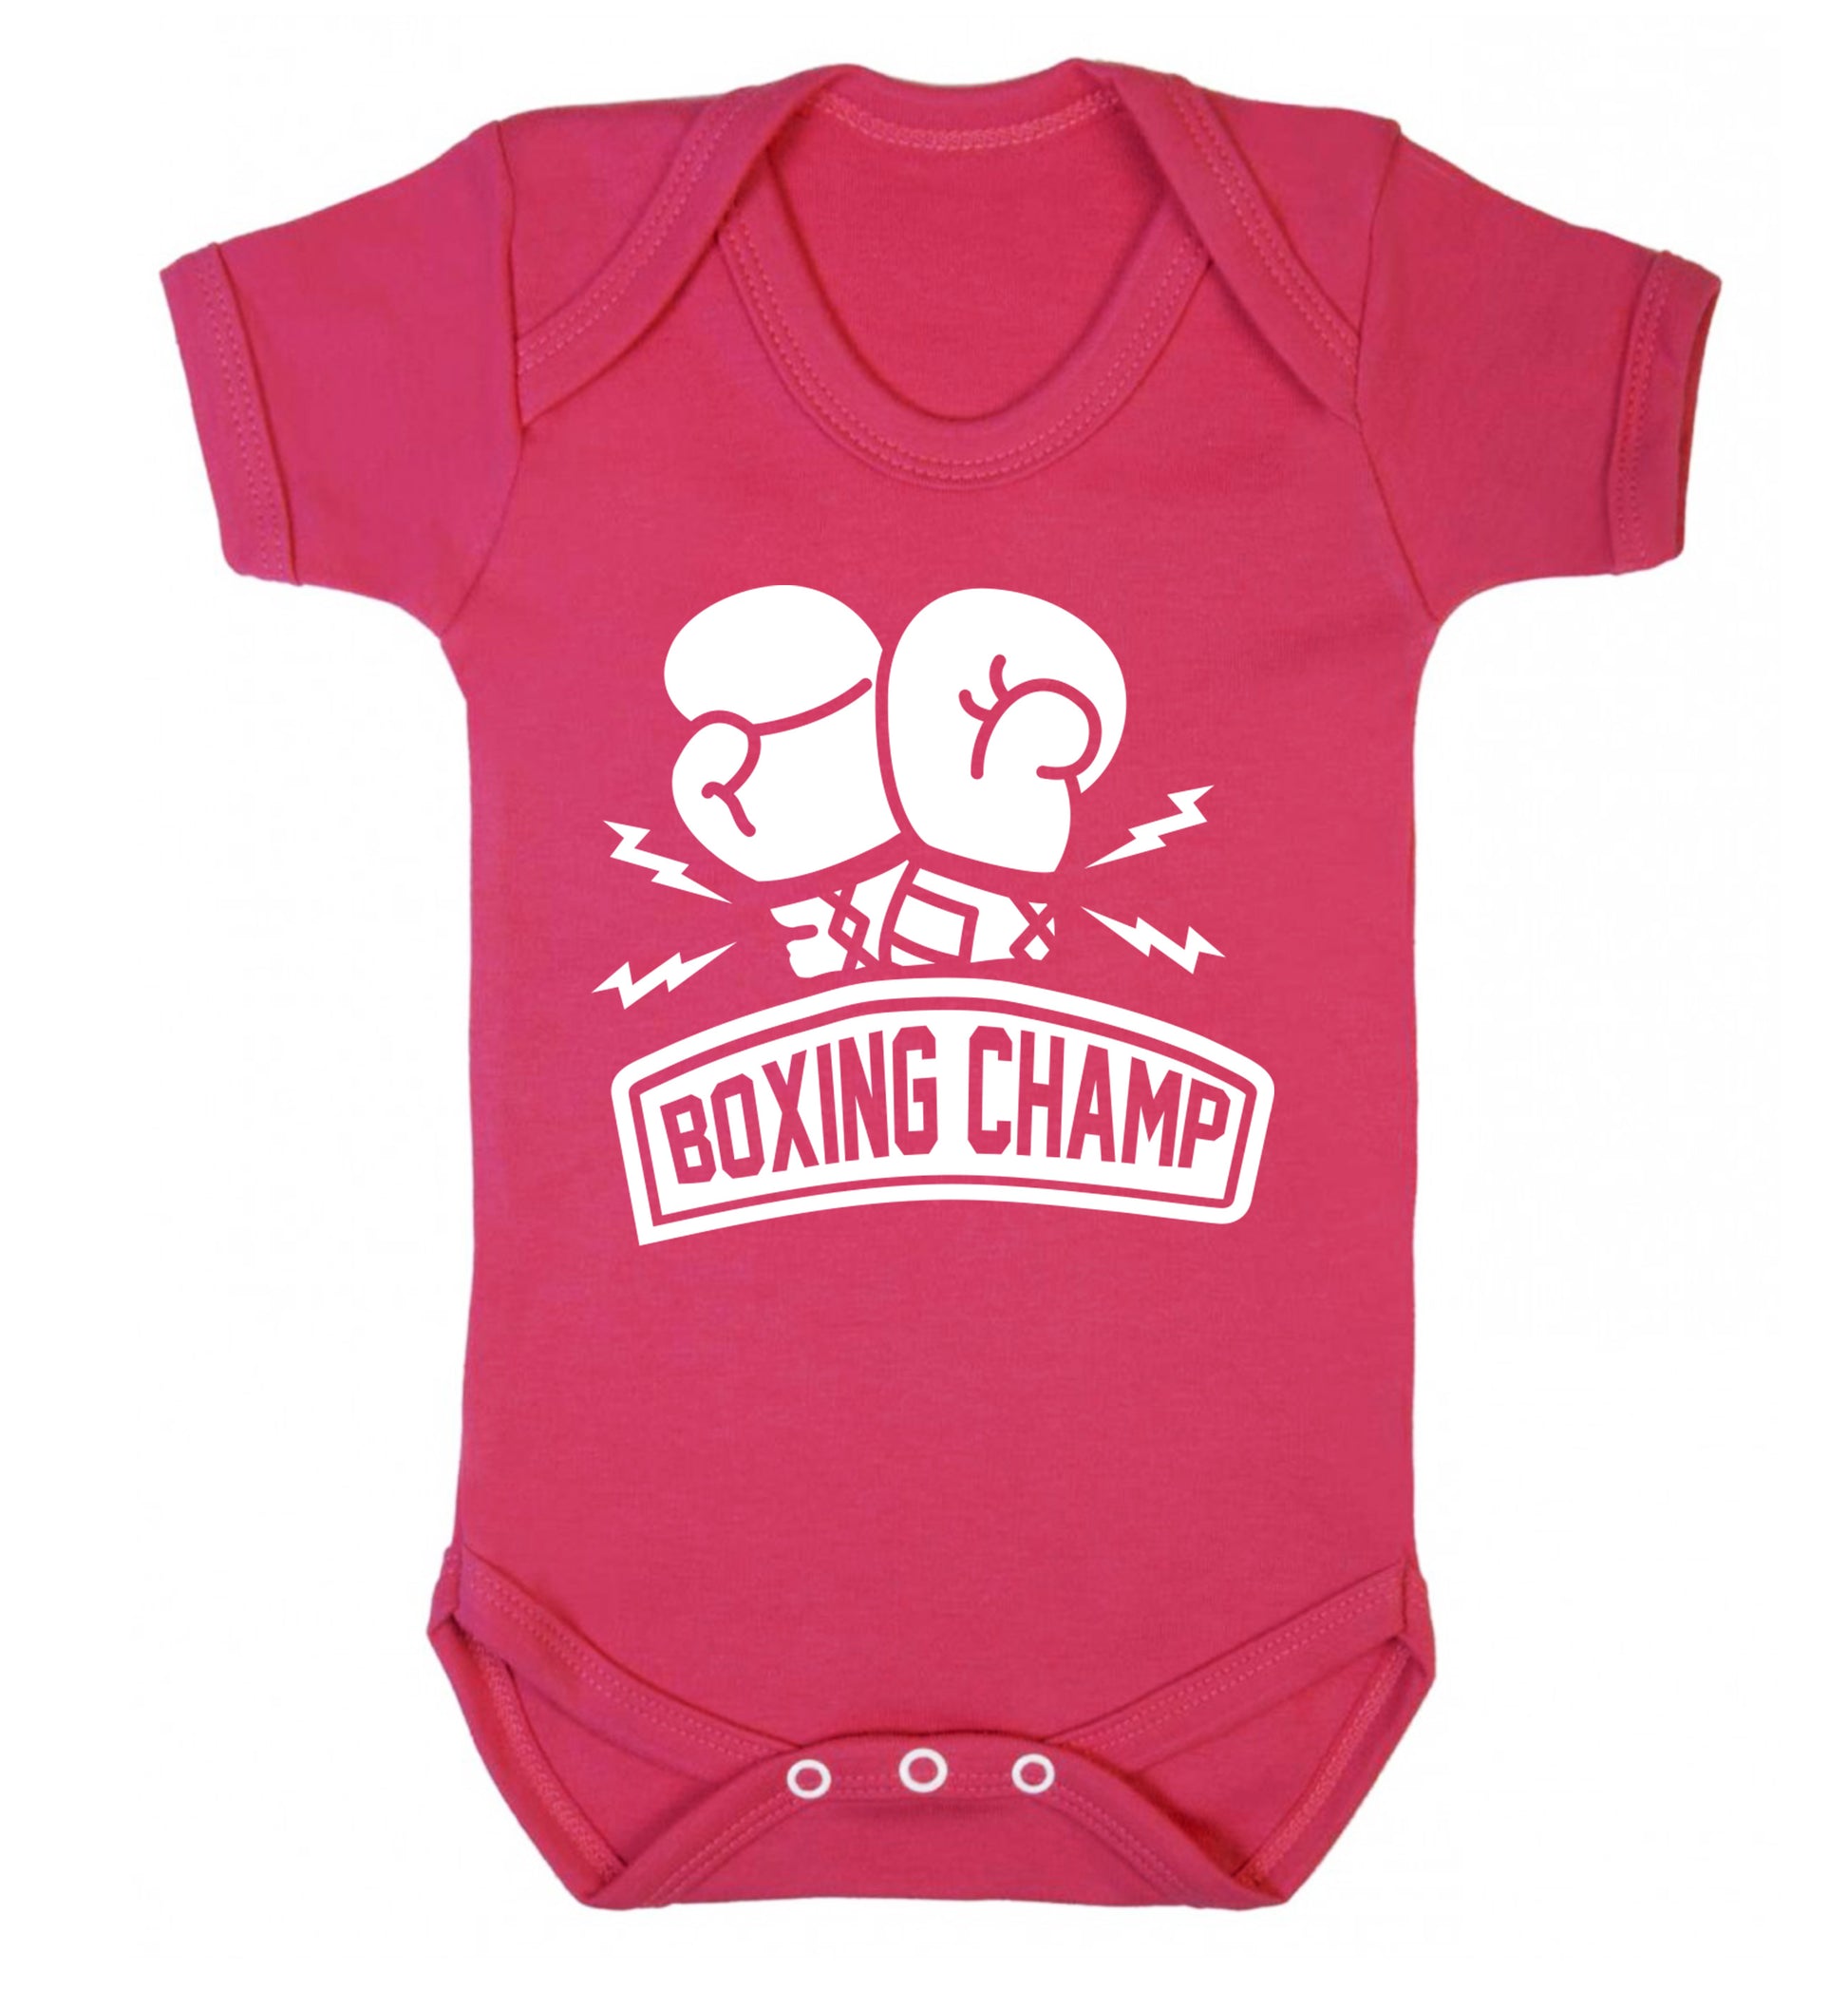 Boxing Champ Baby Vest dark pink 18-24 months